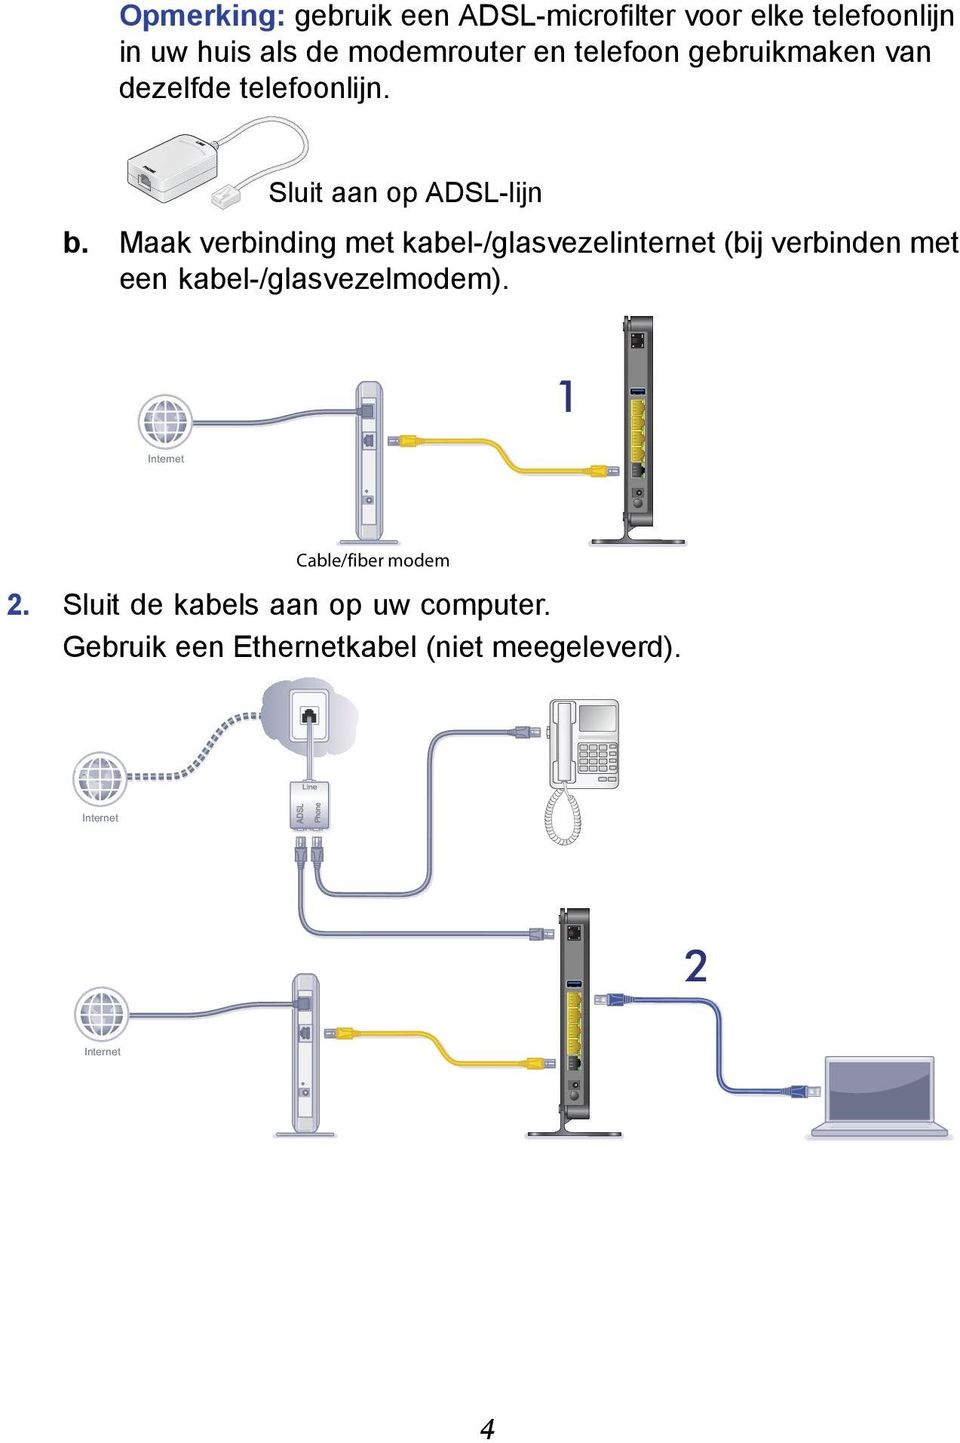 Maak verbinding met kabel-/glasvezelinternet (bij verbinden met een kabel-/glasvezelmodem).